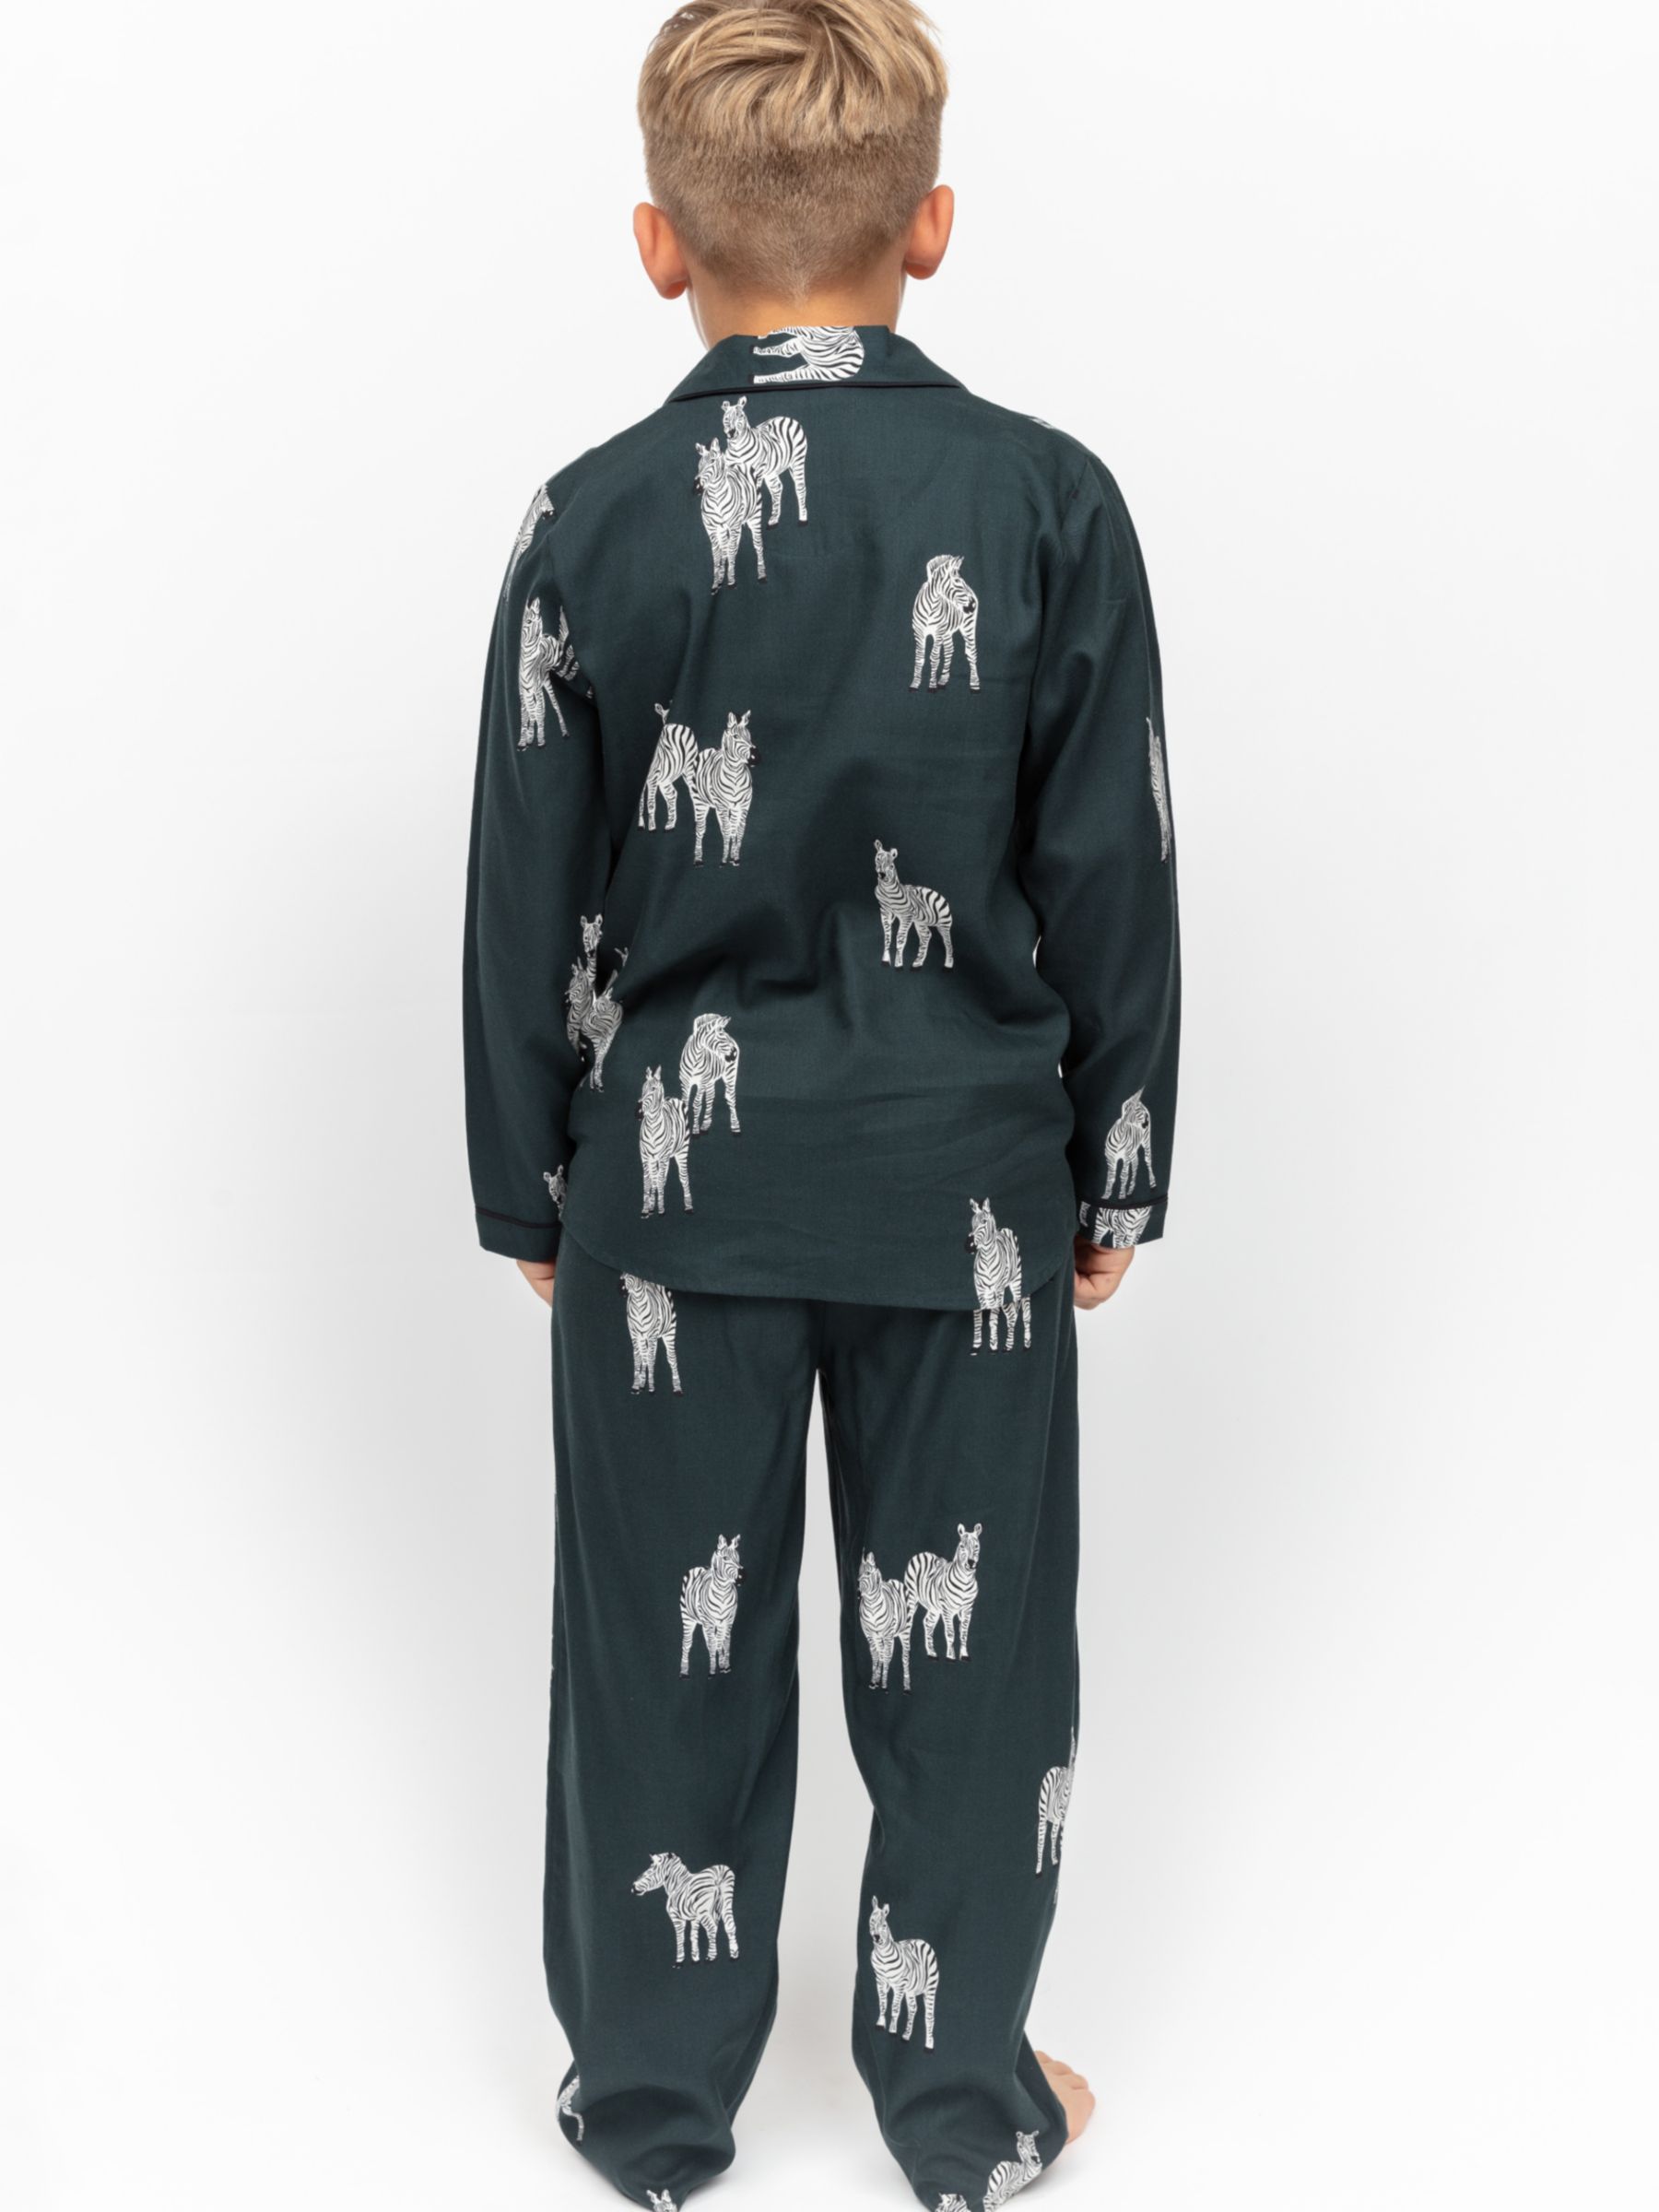 Minijammies Kids' Blake Zebra Print Unisex Pyjamas, Dark Green/Multi, 8-9 years